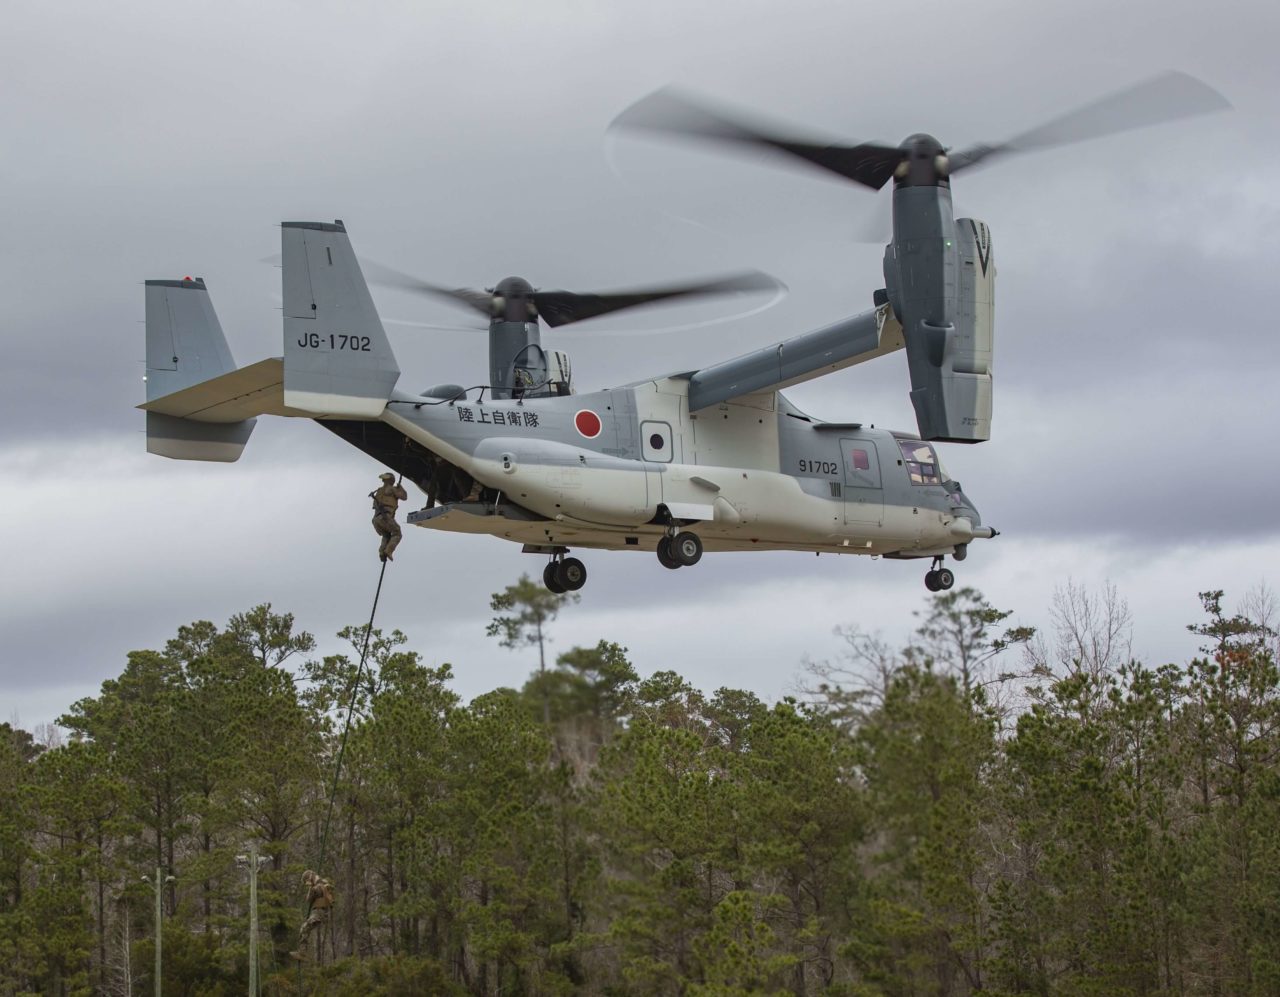 The Bell Boeing V-22 Osprey tiltrotor series